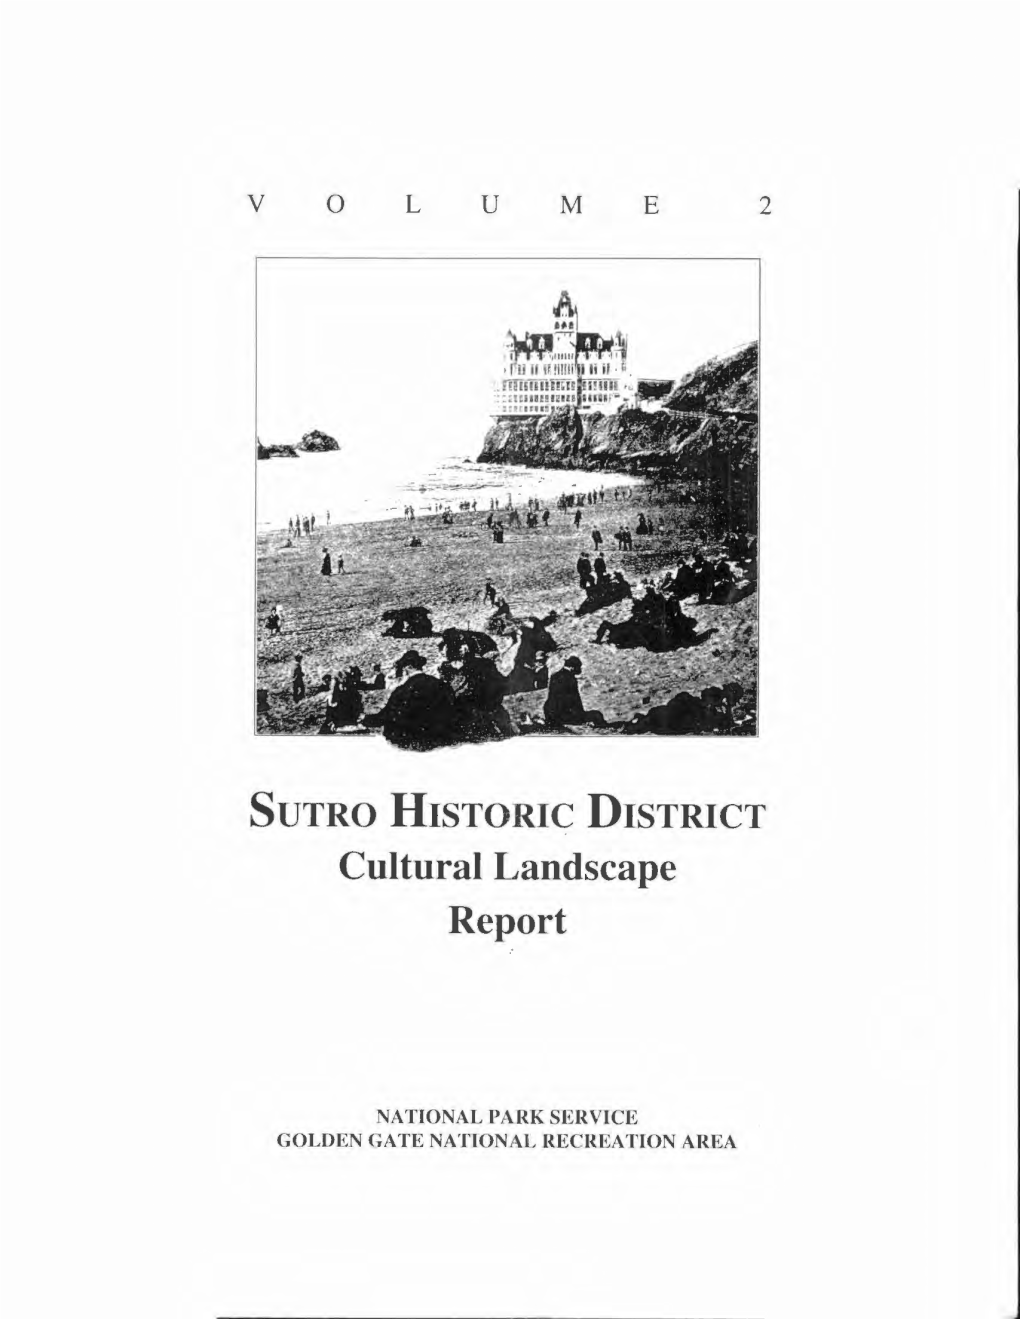 SUTRO HISTORIC DISTRICT Cultural Landscape Report